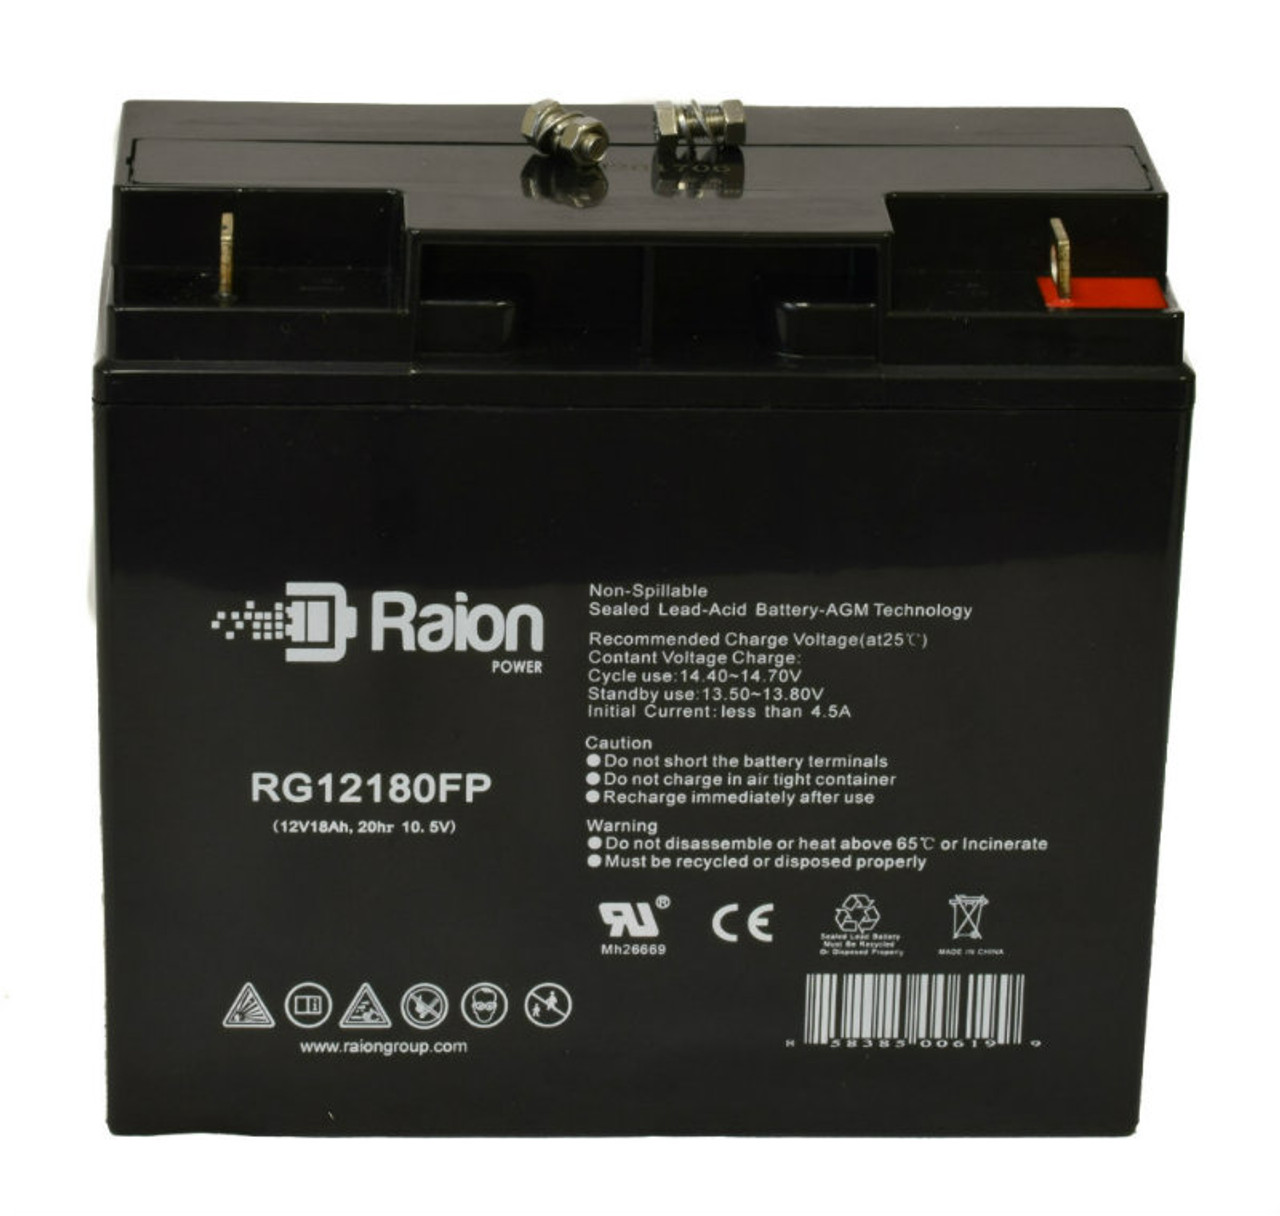 Raion Power RG12180FP 12V 18Ah Lead Acid Battery for Narco Savina